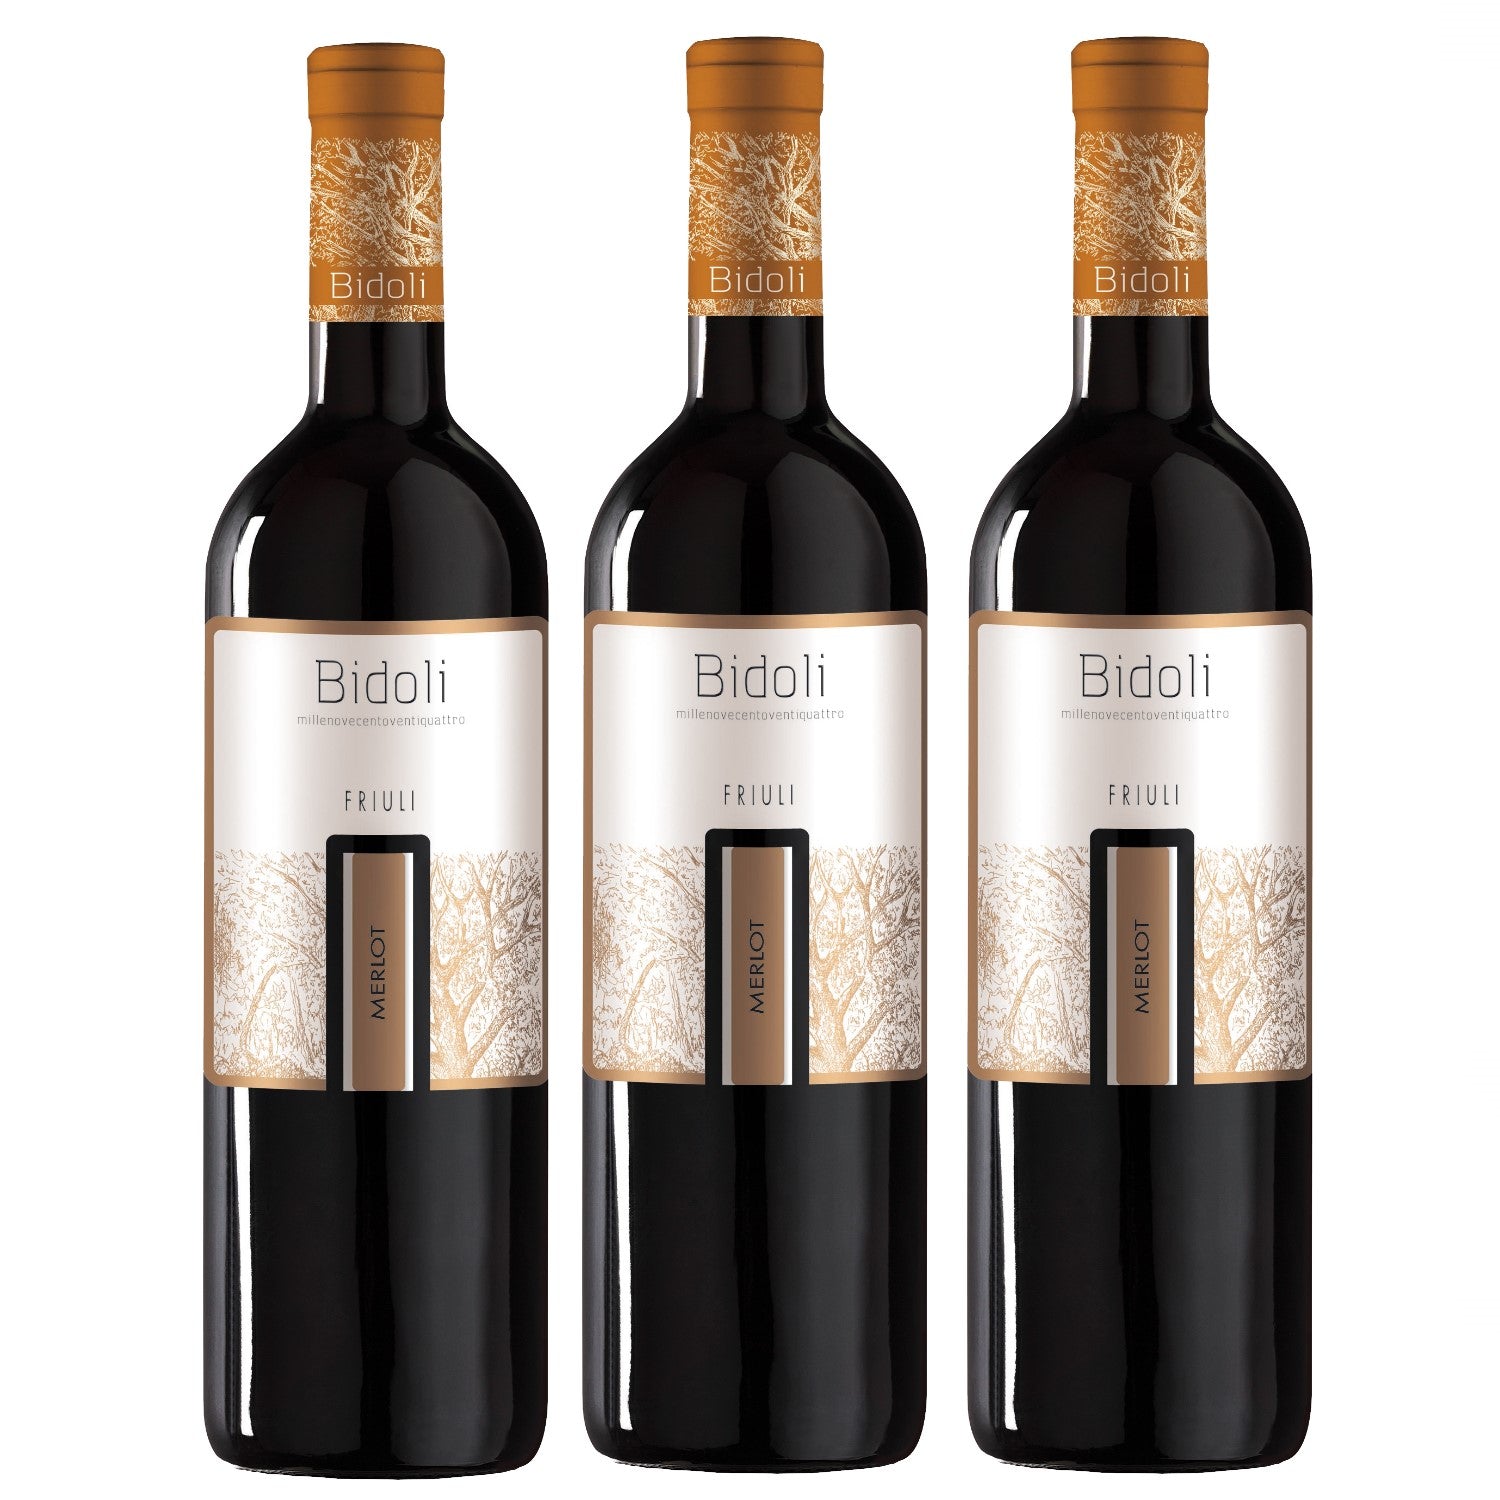 Bidoli Vini Merlot DOC Friuli Grave Rotwein Wein trocken Italien (3 x 0.75l) - Versanel -